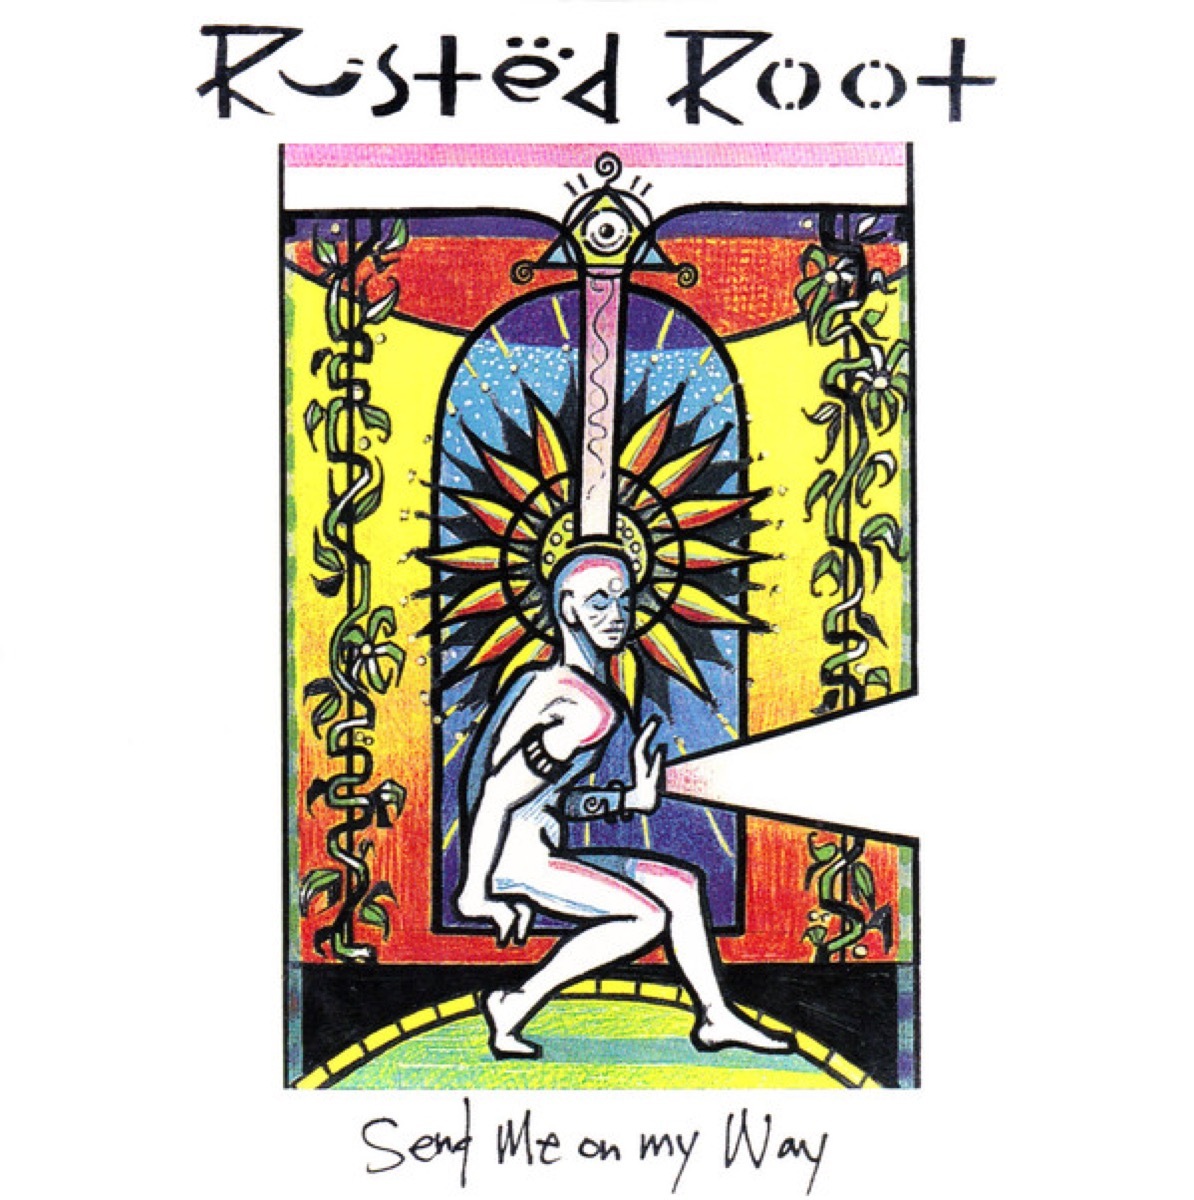 Send Me On My Way by Rusted Root Best One-Hit Wonders